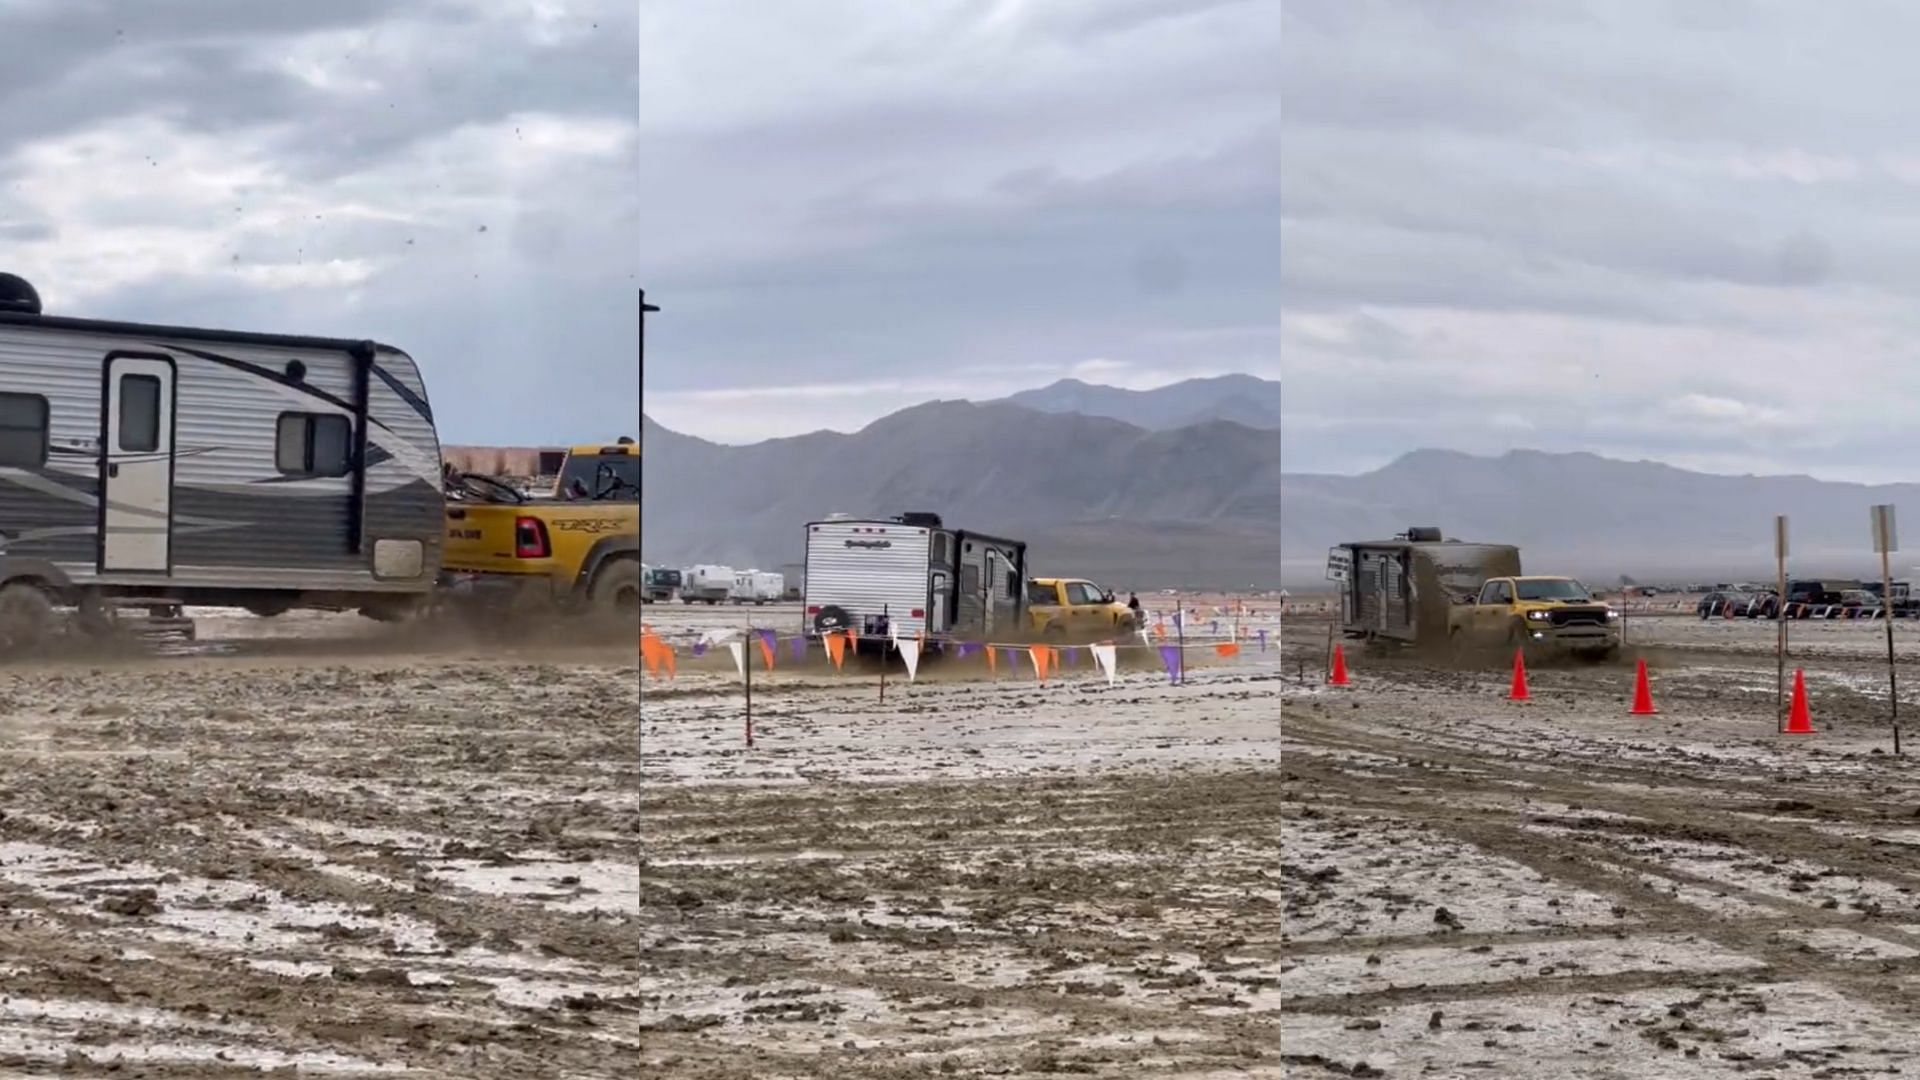 "Excellent truck advertisement" Ram TRX Burning Man video goes viral